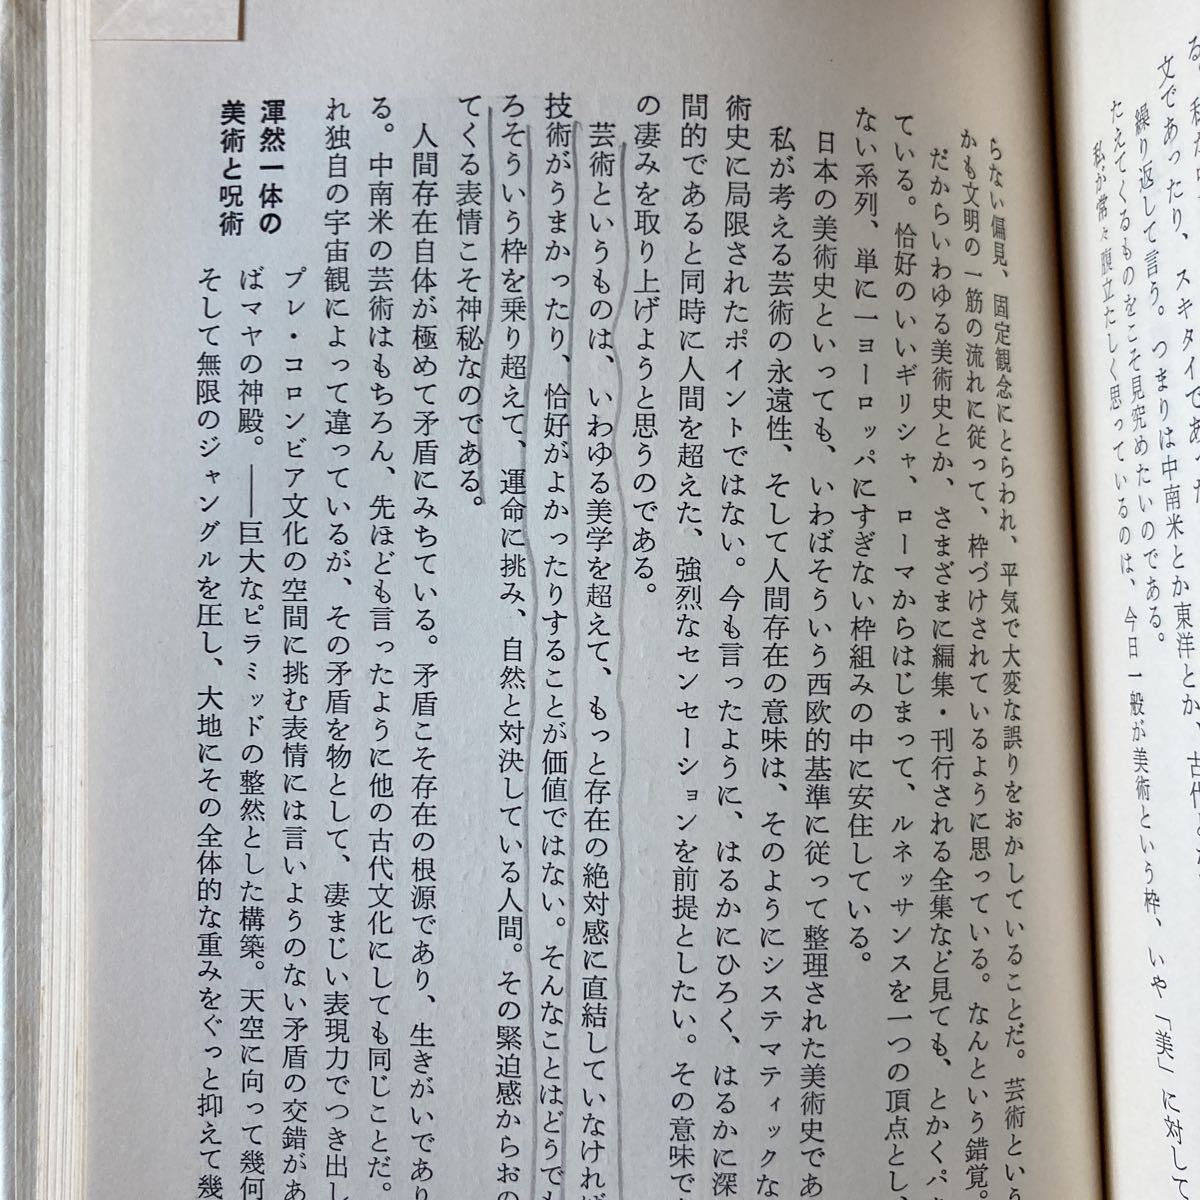  Okamoto Taro beautiful. world travel Shinchosha separate volume 1982 used book